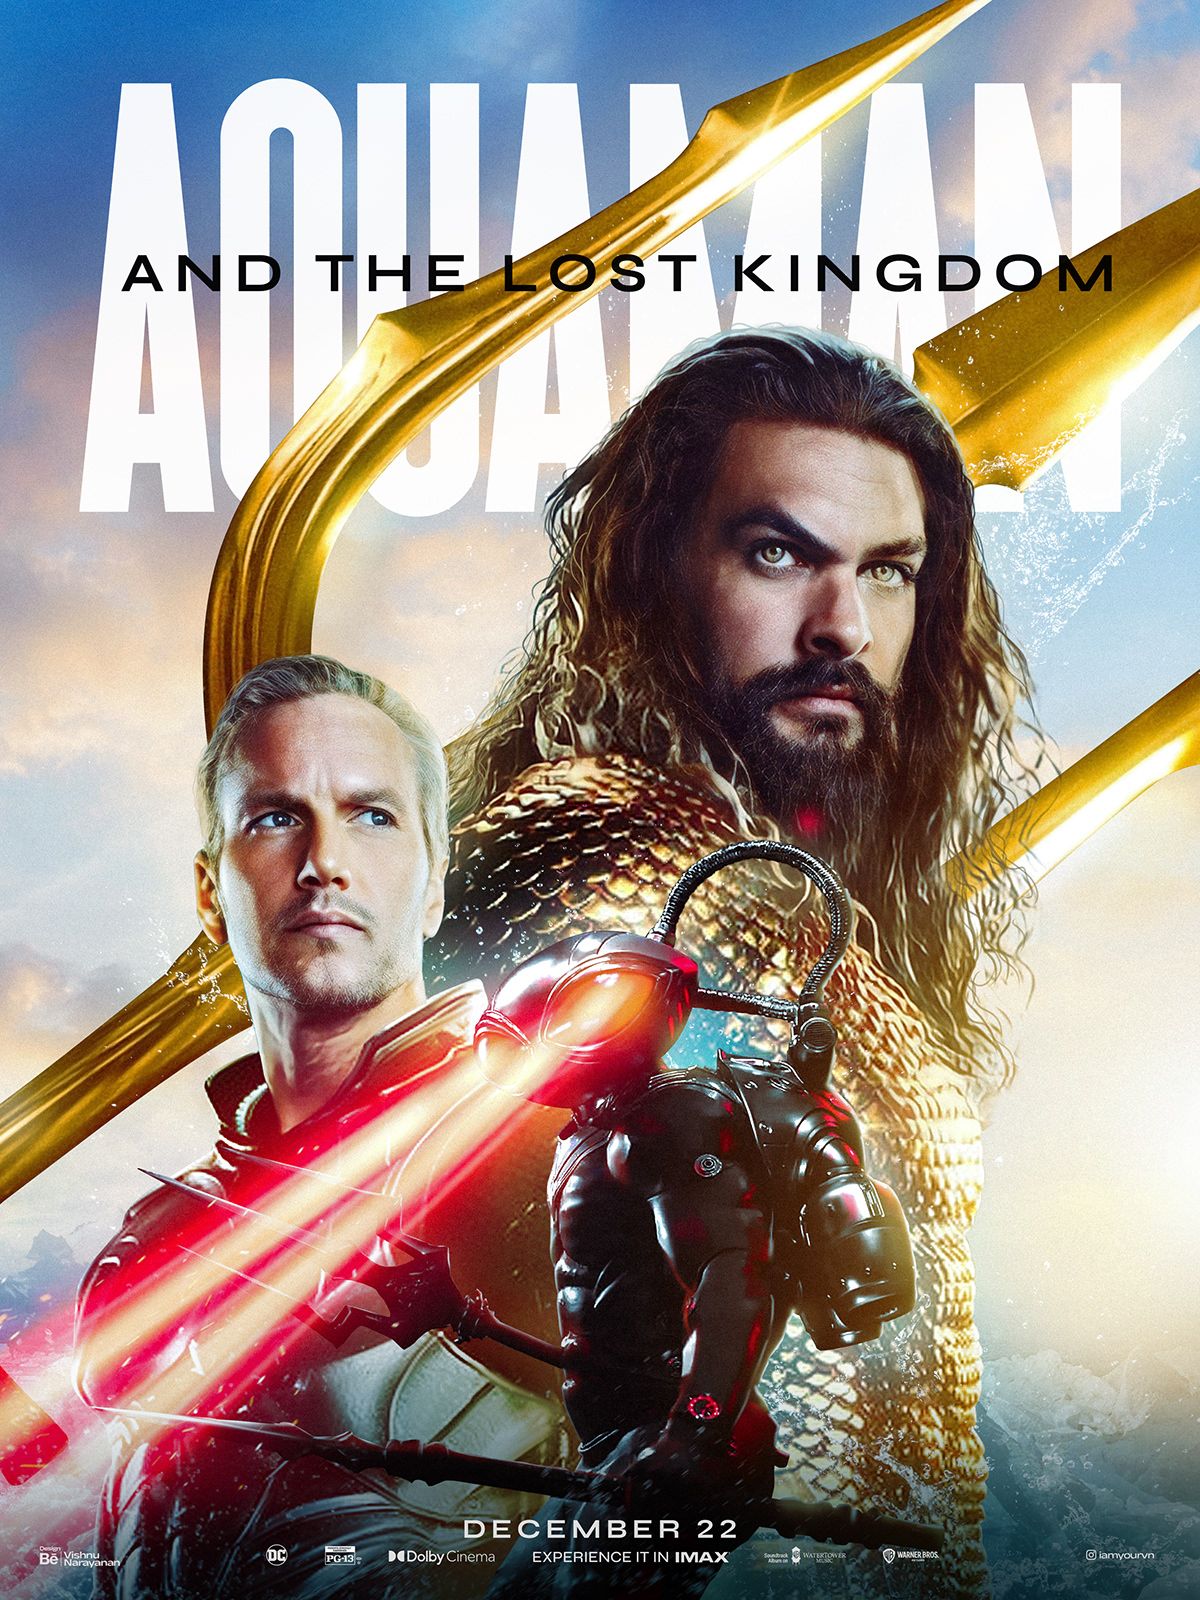 Aquaman Dc Comics key art movie poster posters Poster Design Advertising  Graphic Designer marketing   the Lost Kingdom